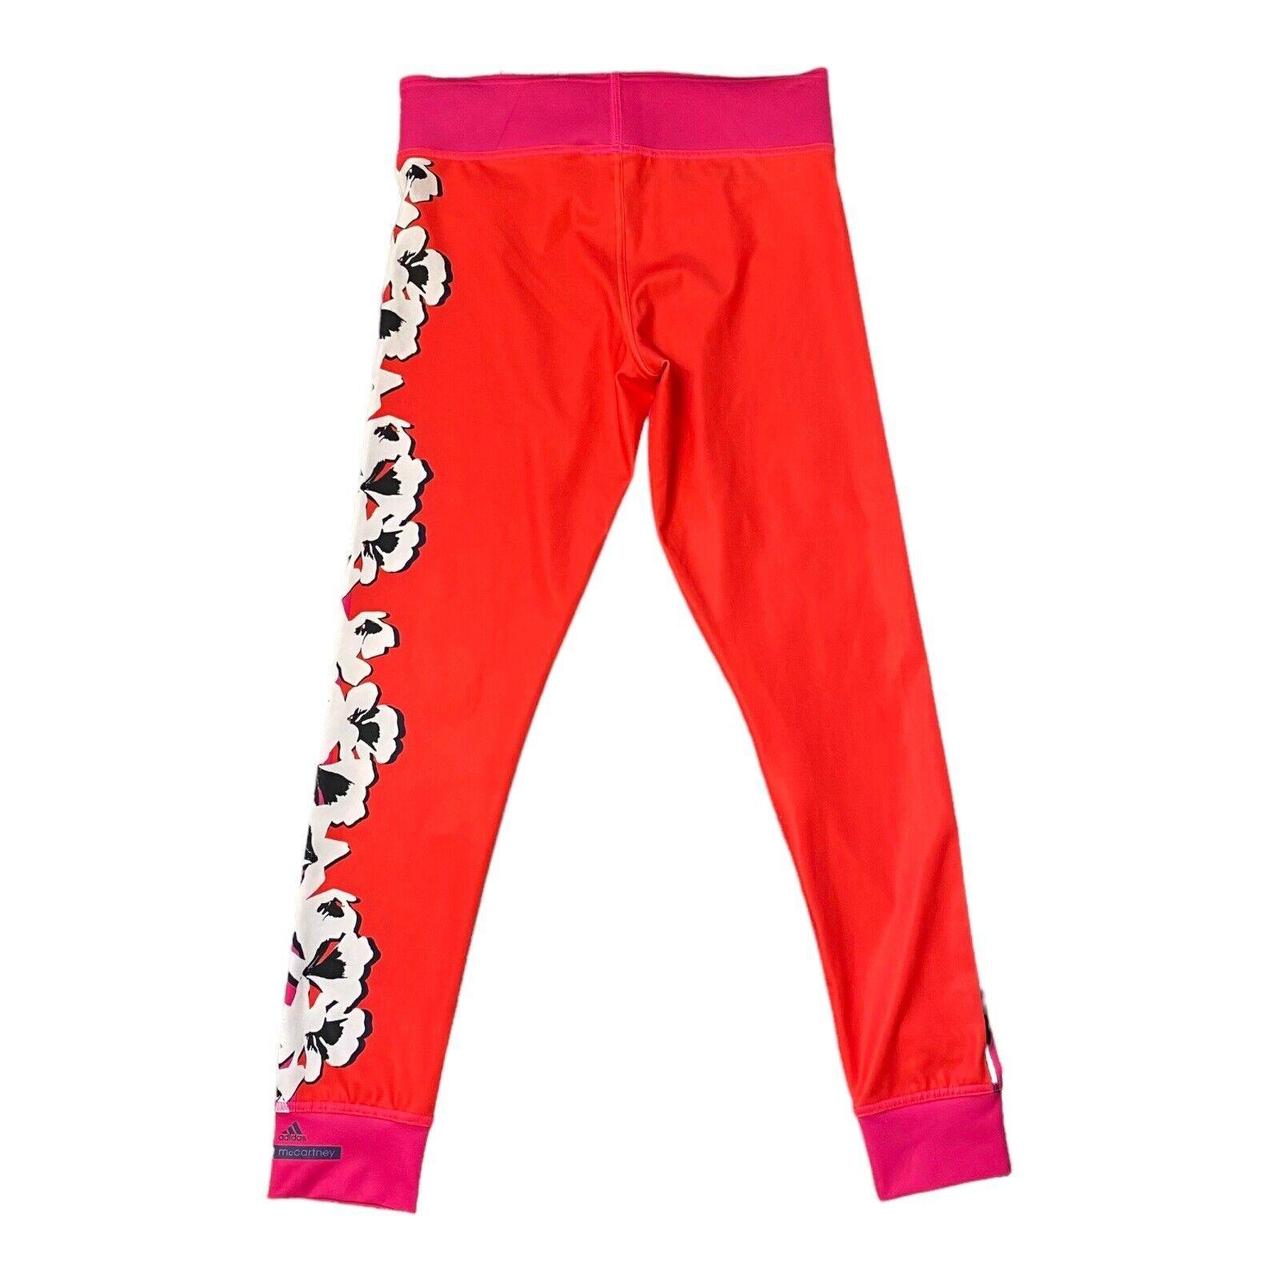 Stella McCartney leggings Adidas yoga pants Pink - Depop